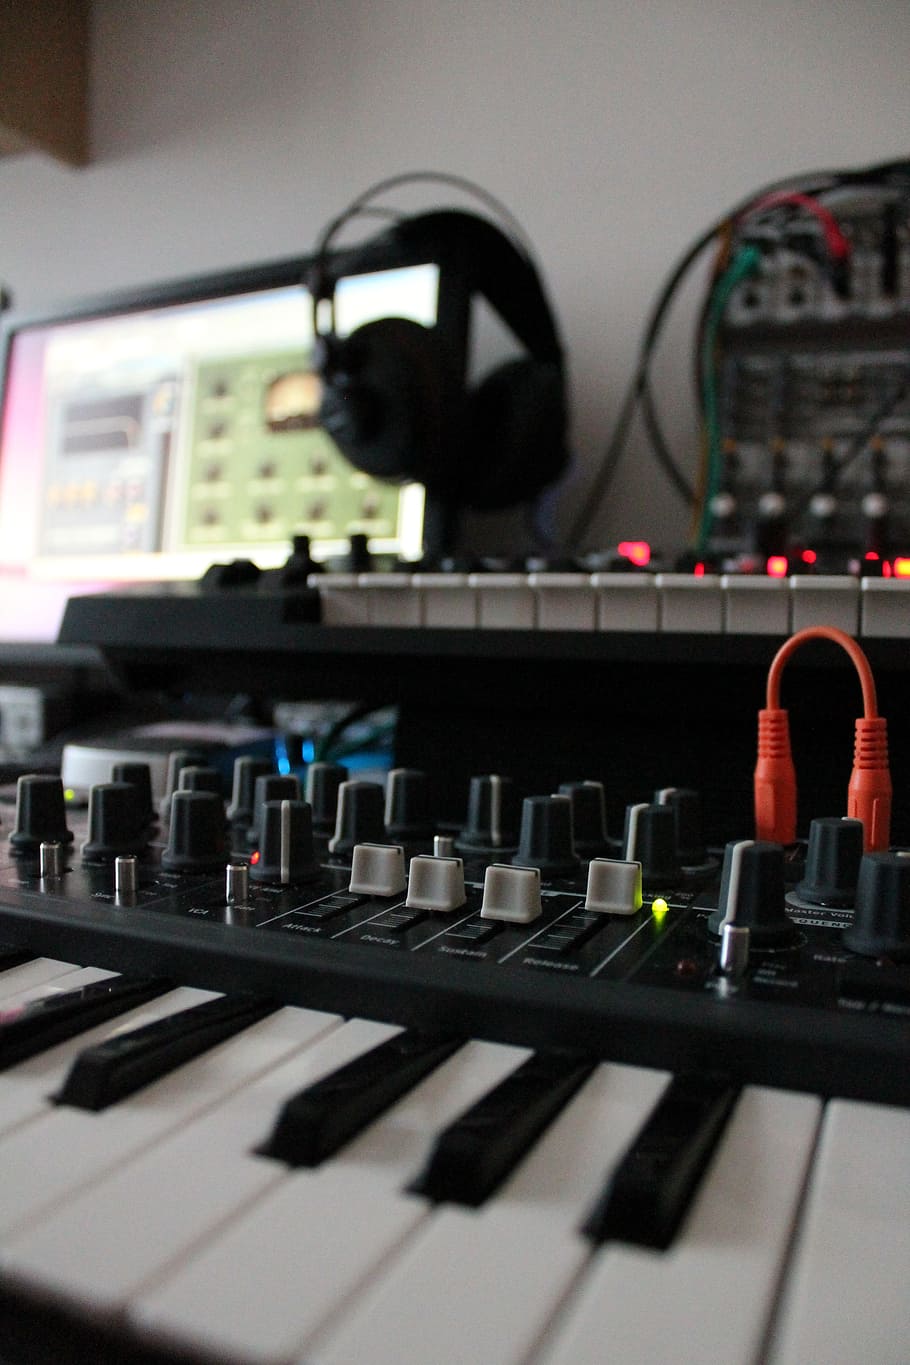 hitam, listrik, foto organ, Musik, Studio, Rekaman, Synthesizer, tombol, headphone, di dalam ruangan